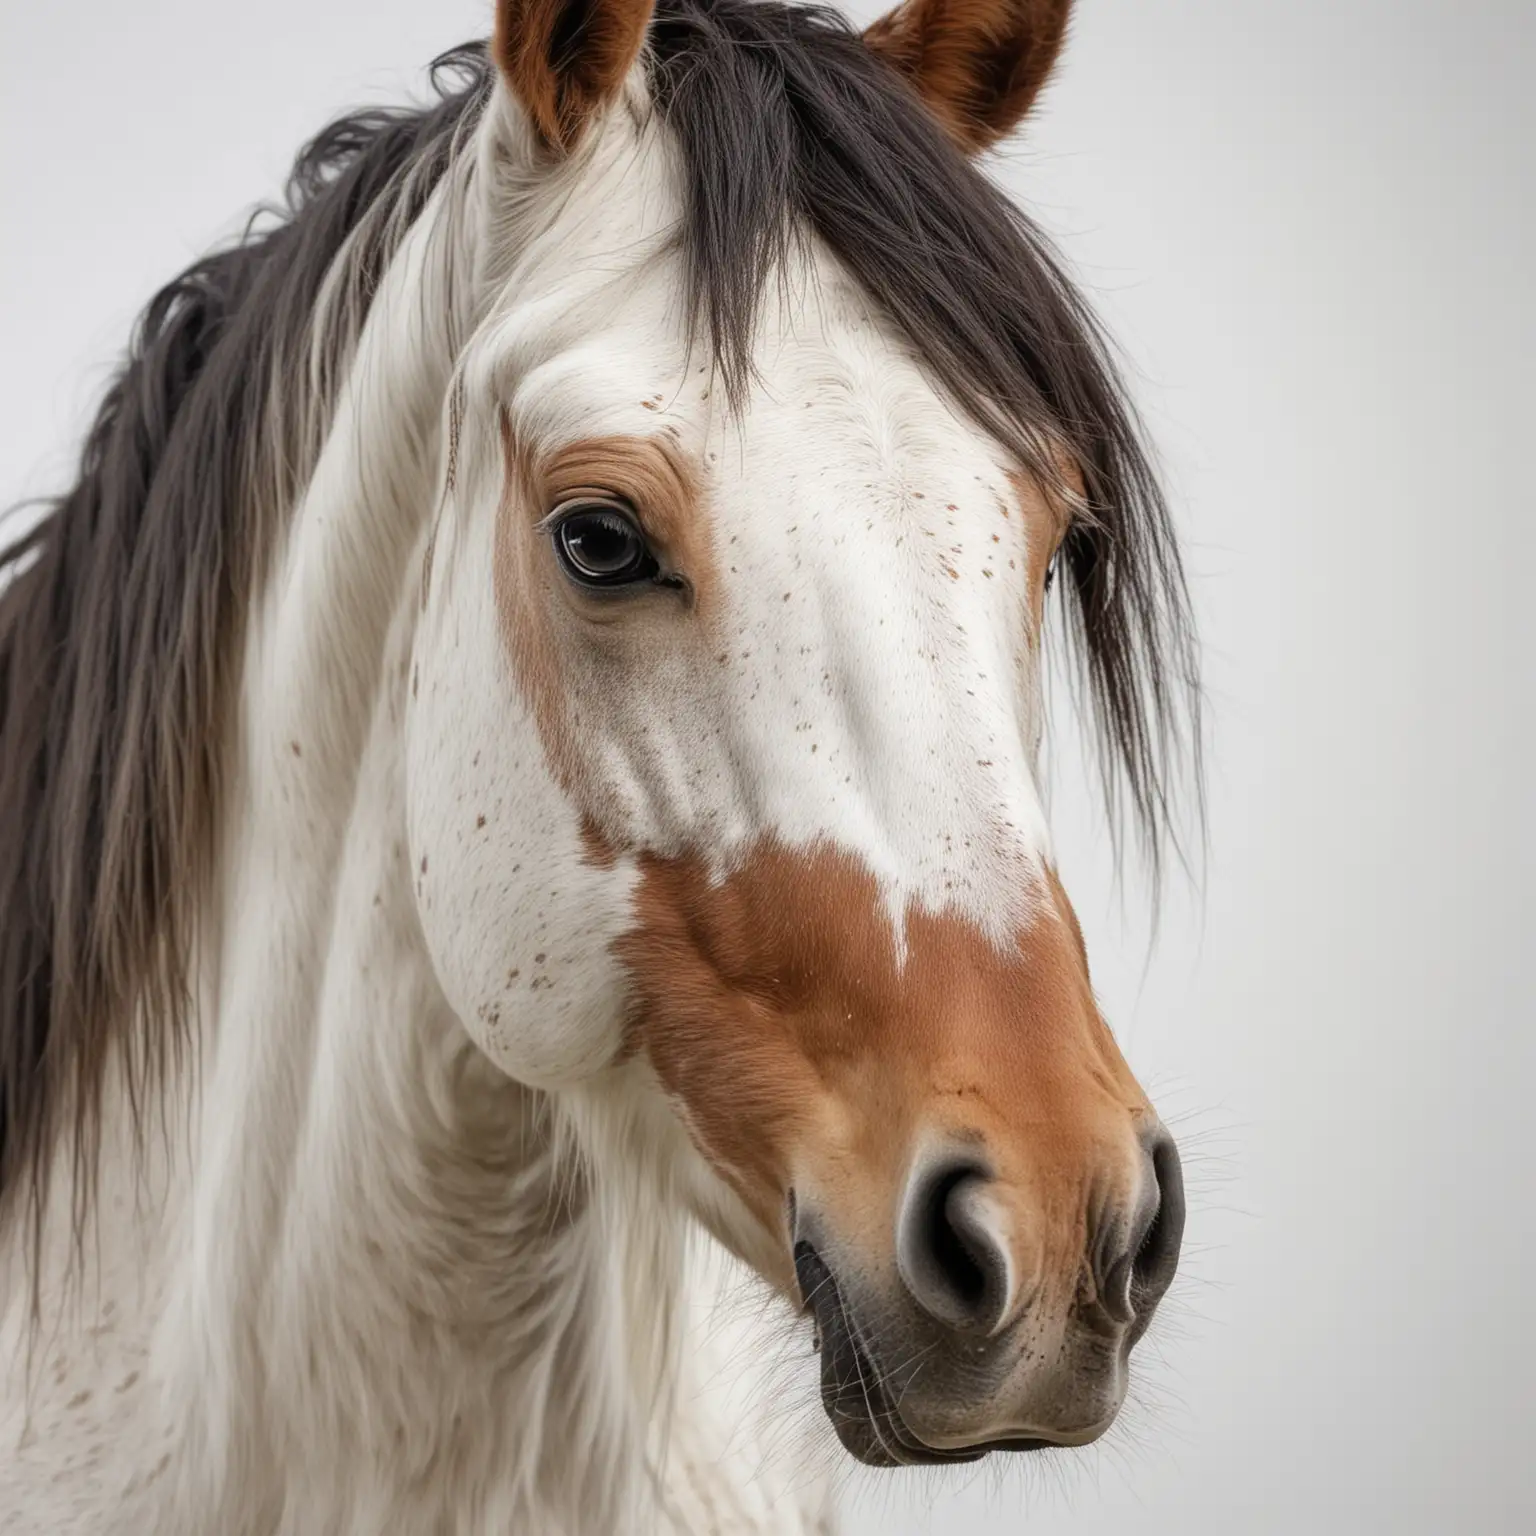 Horse Face Portrait on White Background